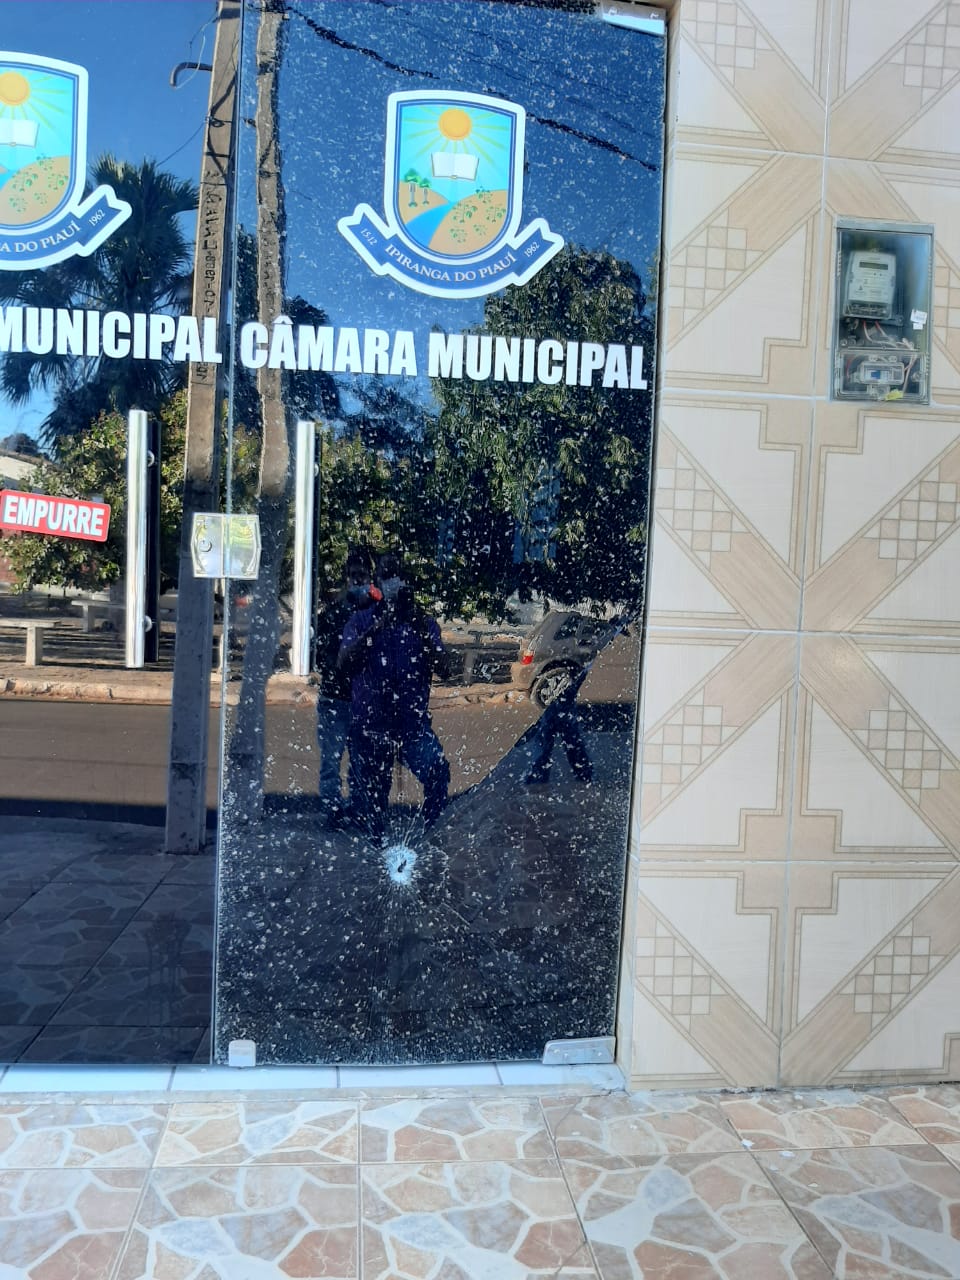 Vândalo (s) arrobaram a porta da Câmara Municipal